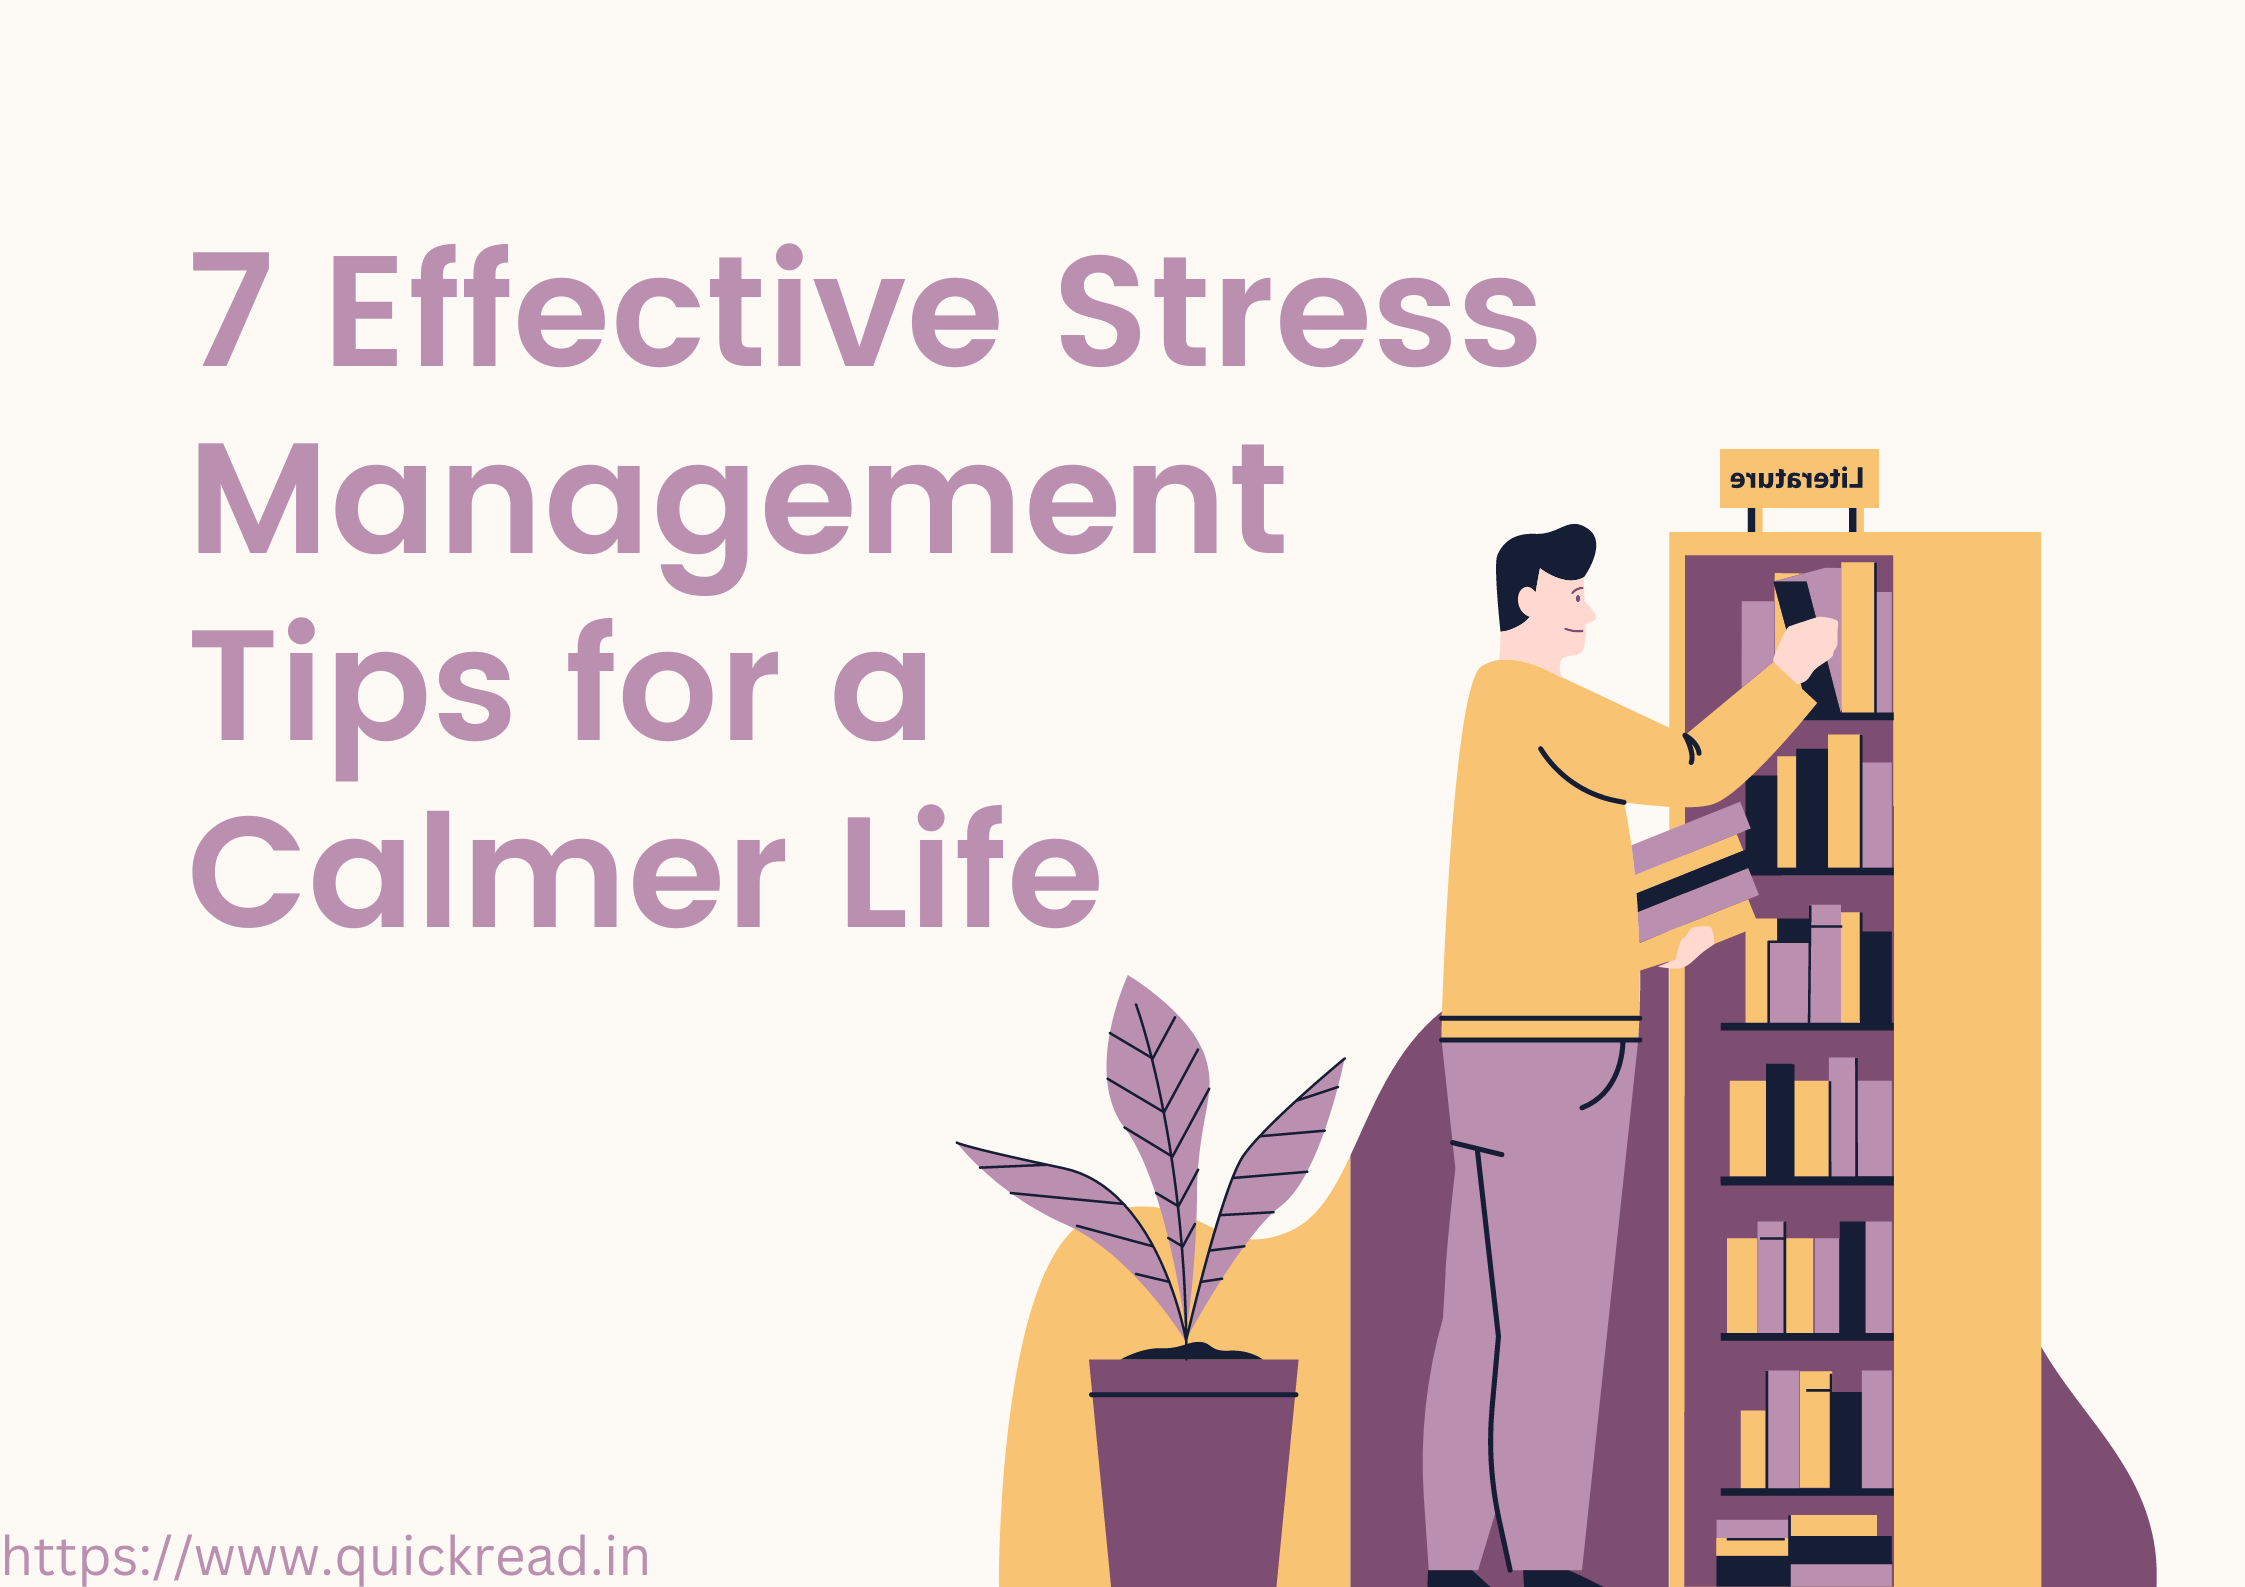 7 Effective Stress Management Tips for a Calmer Life